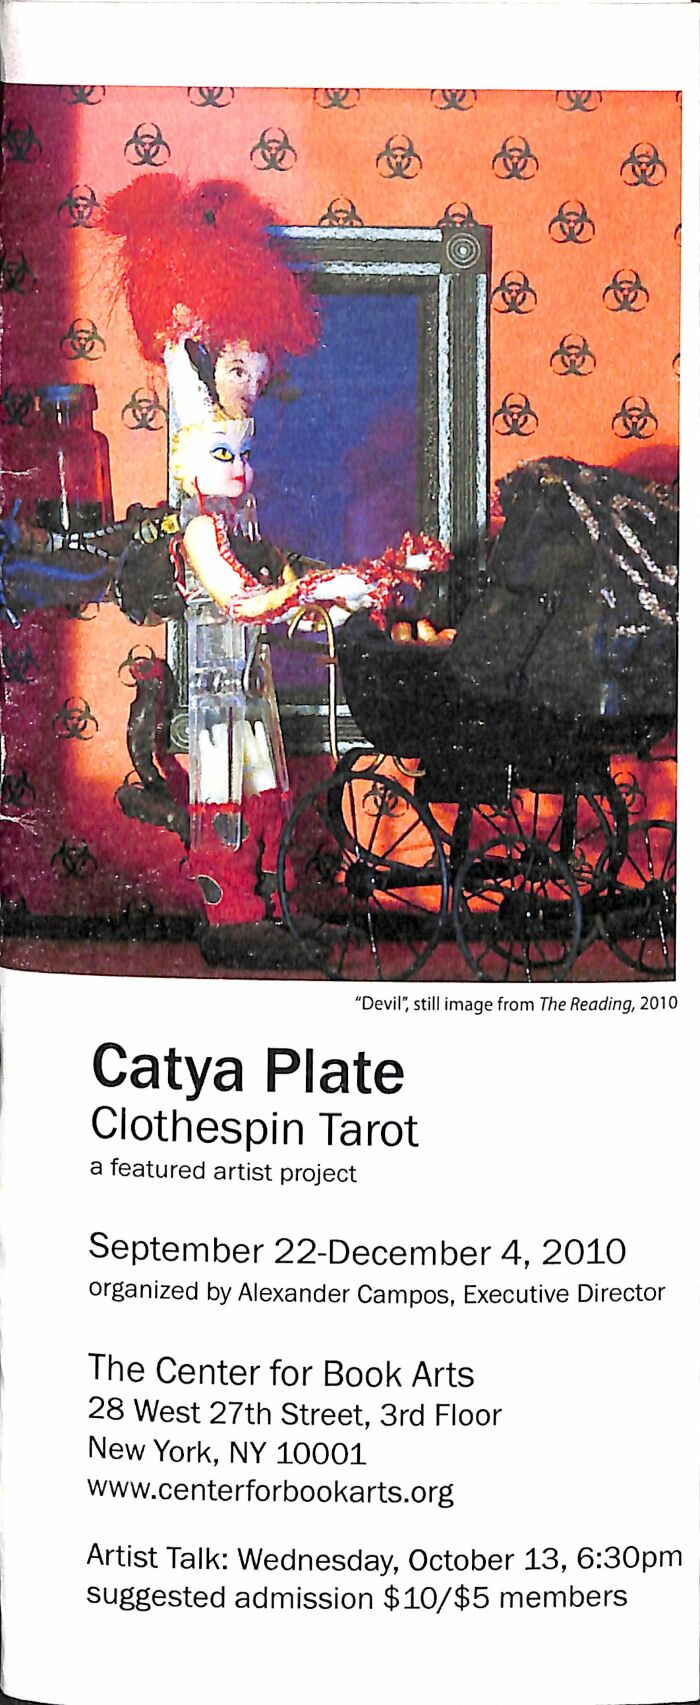 [Exhibition brochure for "Catya Plate: Clothespin Tarot"]
